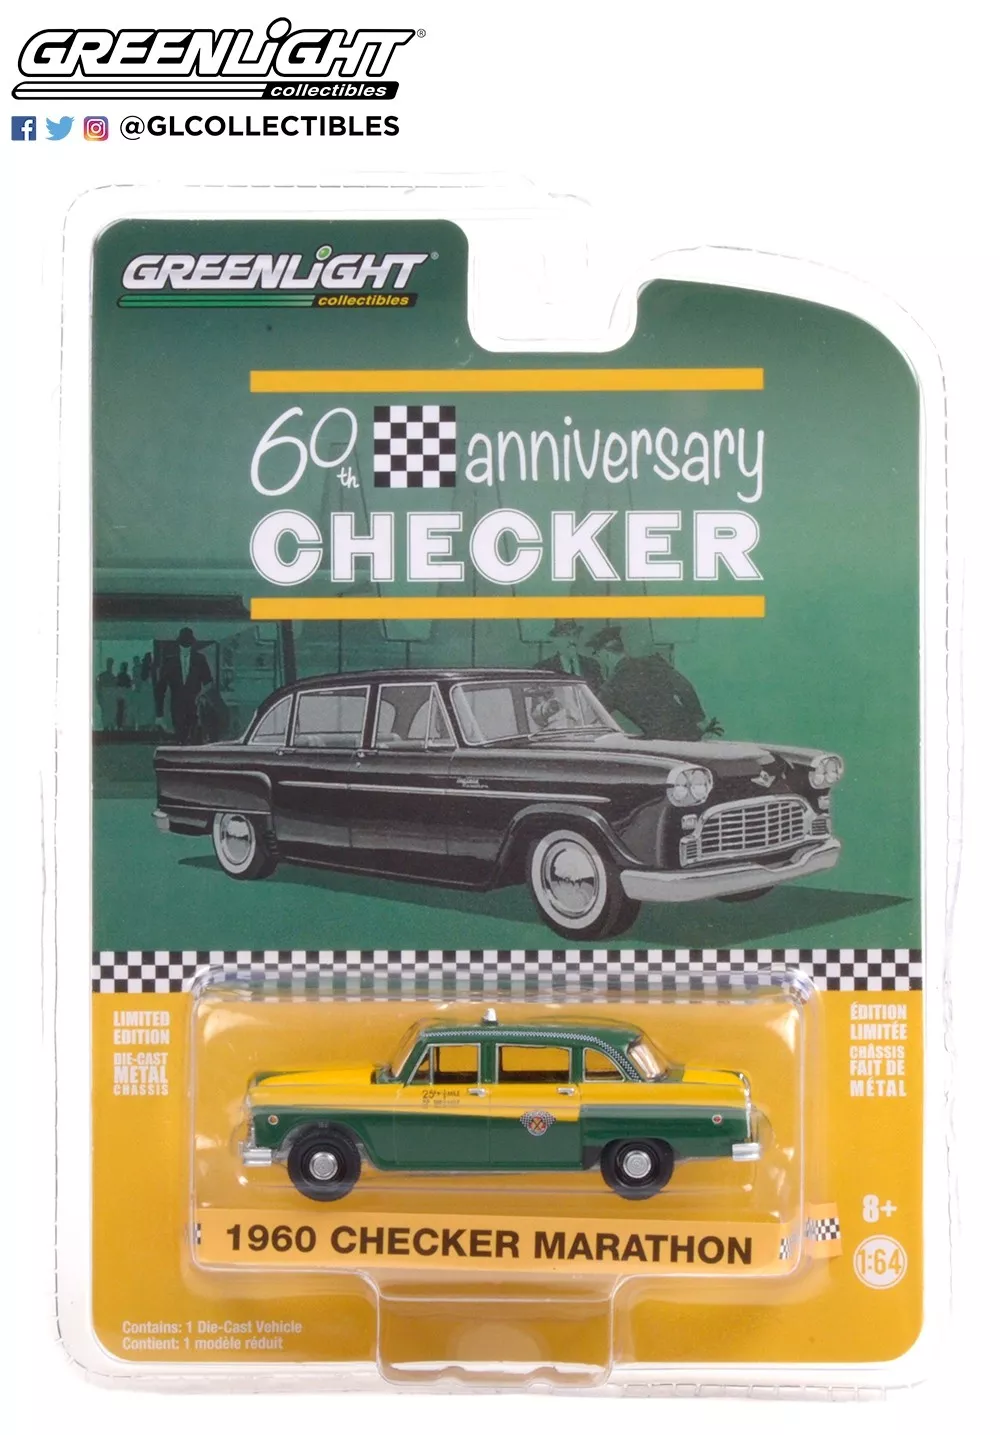 Greenlight - 1960 Checker Marat hon  A11 - Checker 60 Years 